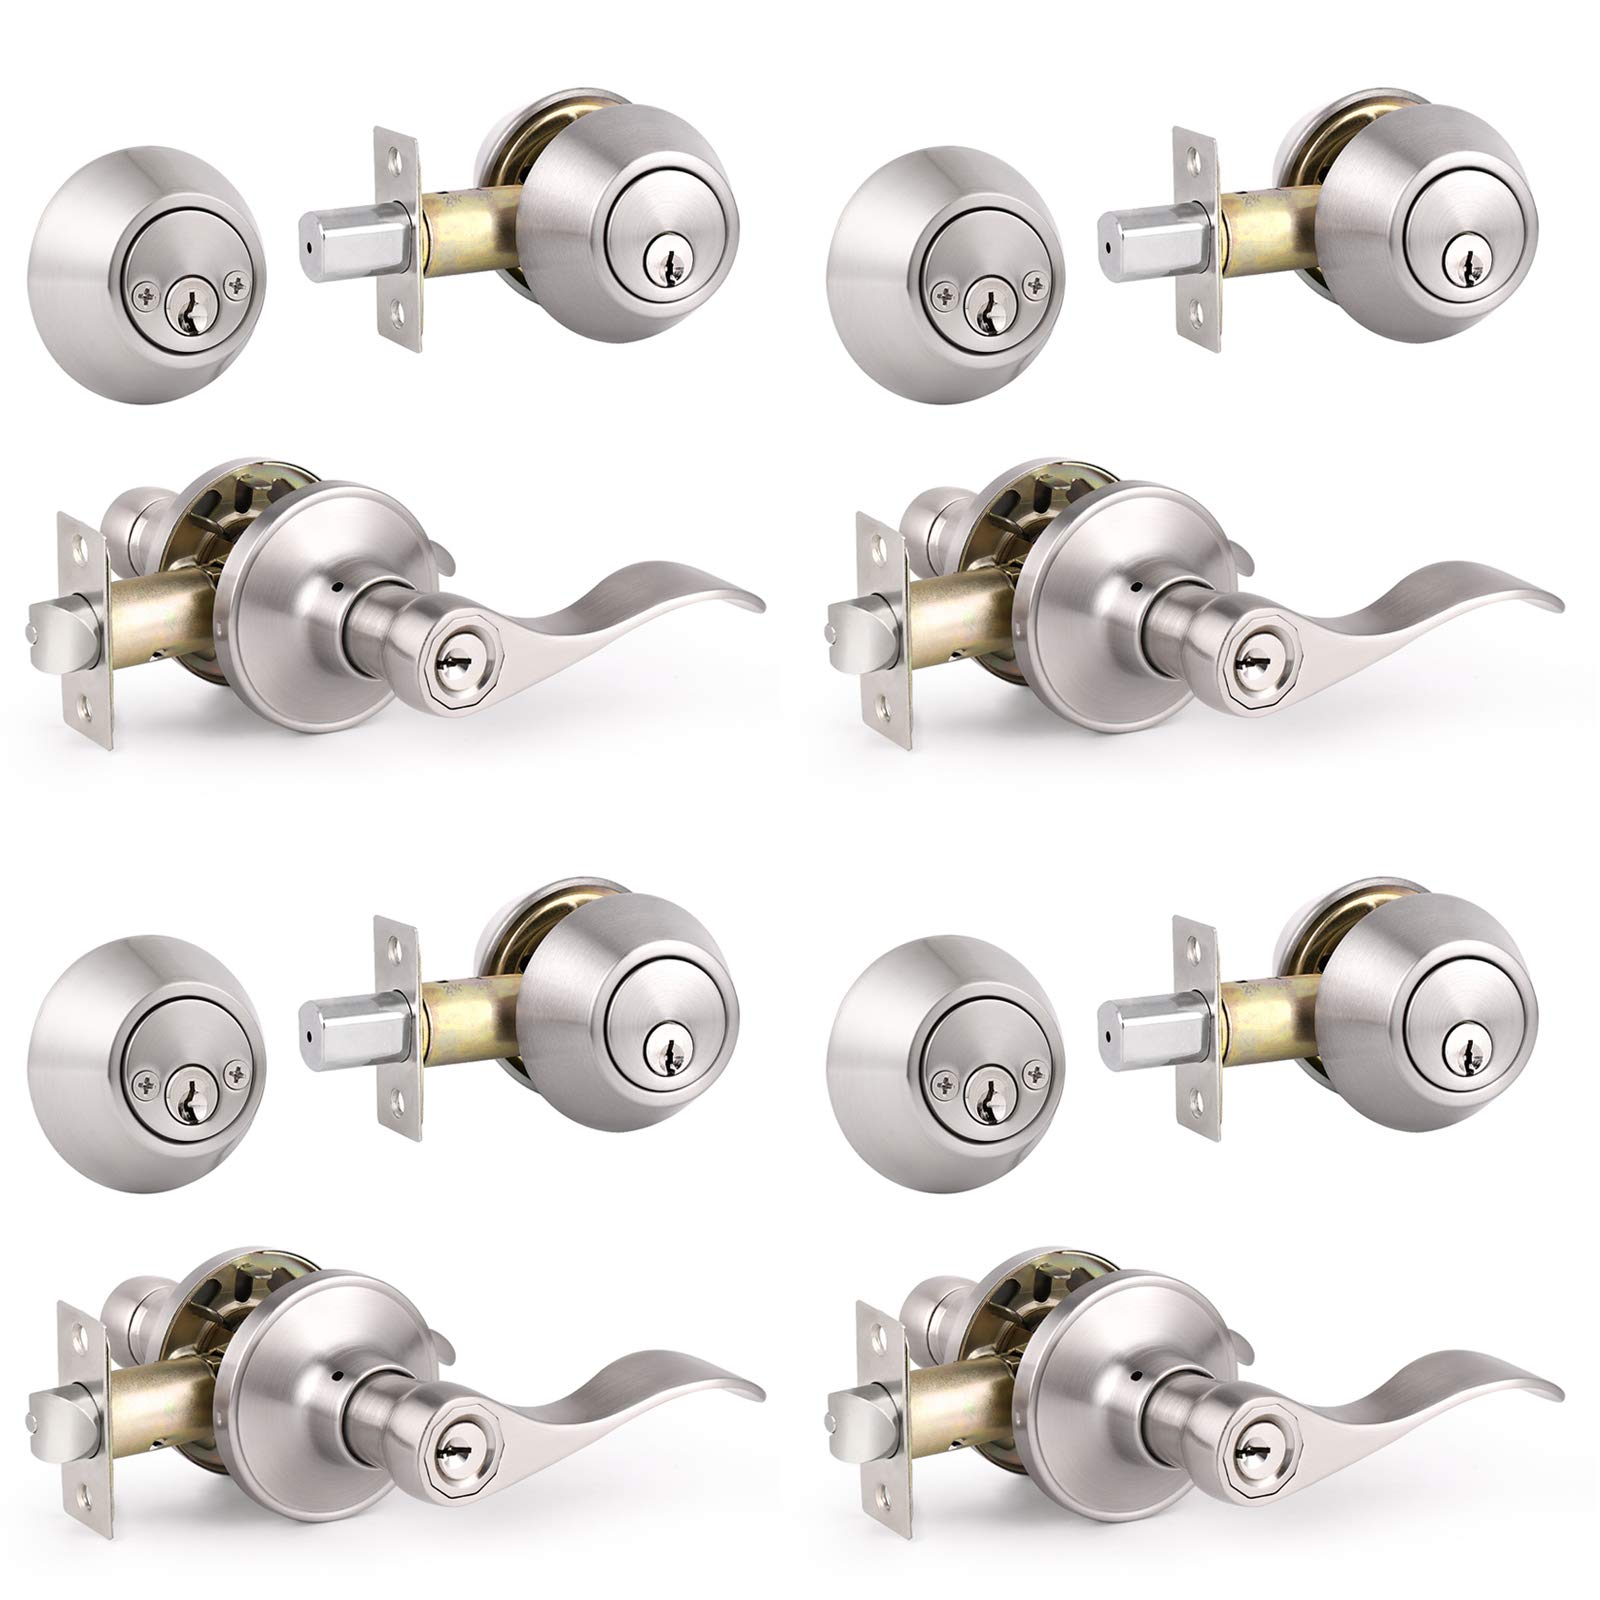 Knobonly 4 Pack Front Door Entry Lever Lockset and Double cylinder Deadbolt combination Set, Satin Nickel- All Keyed Alike(Same 